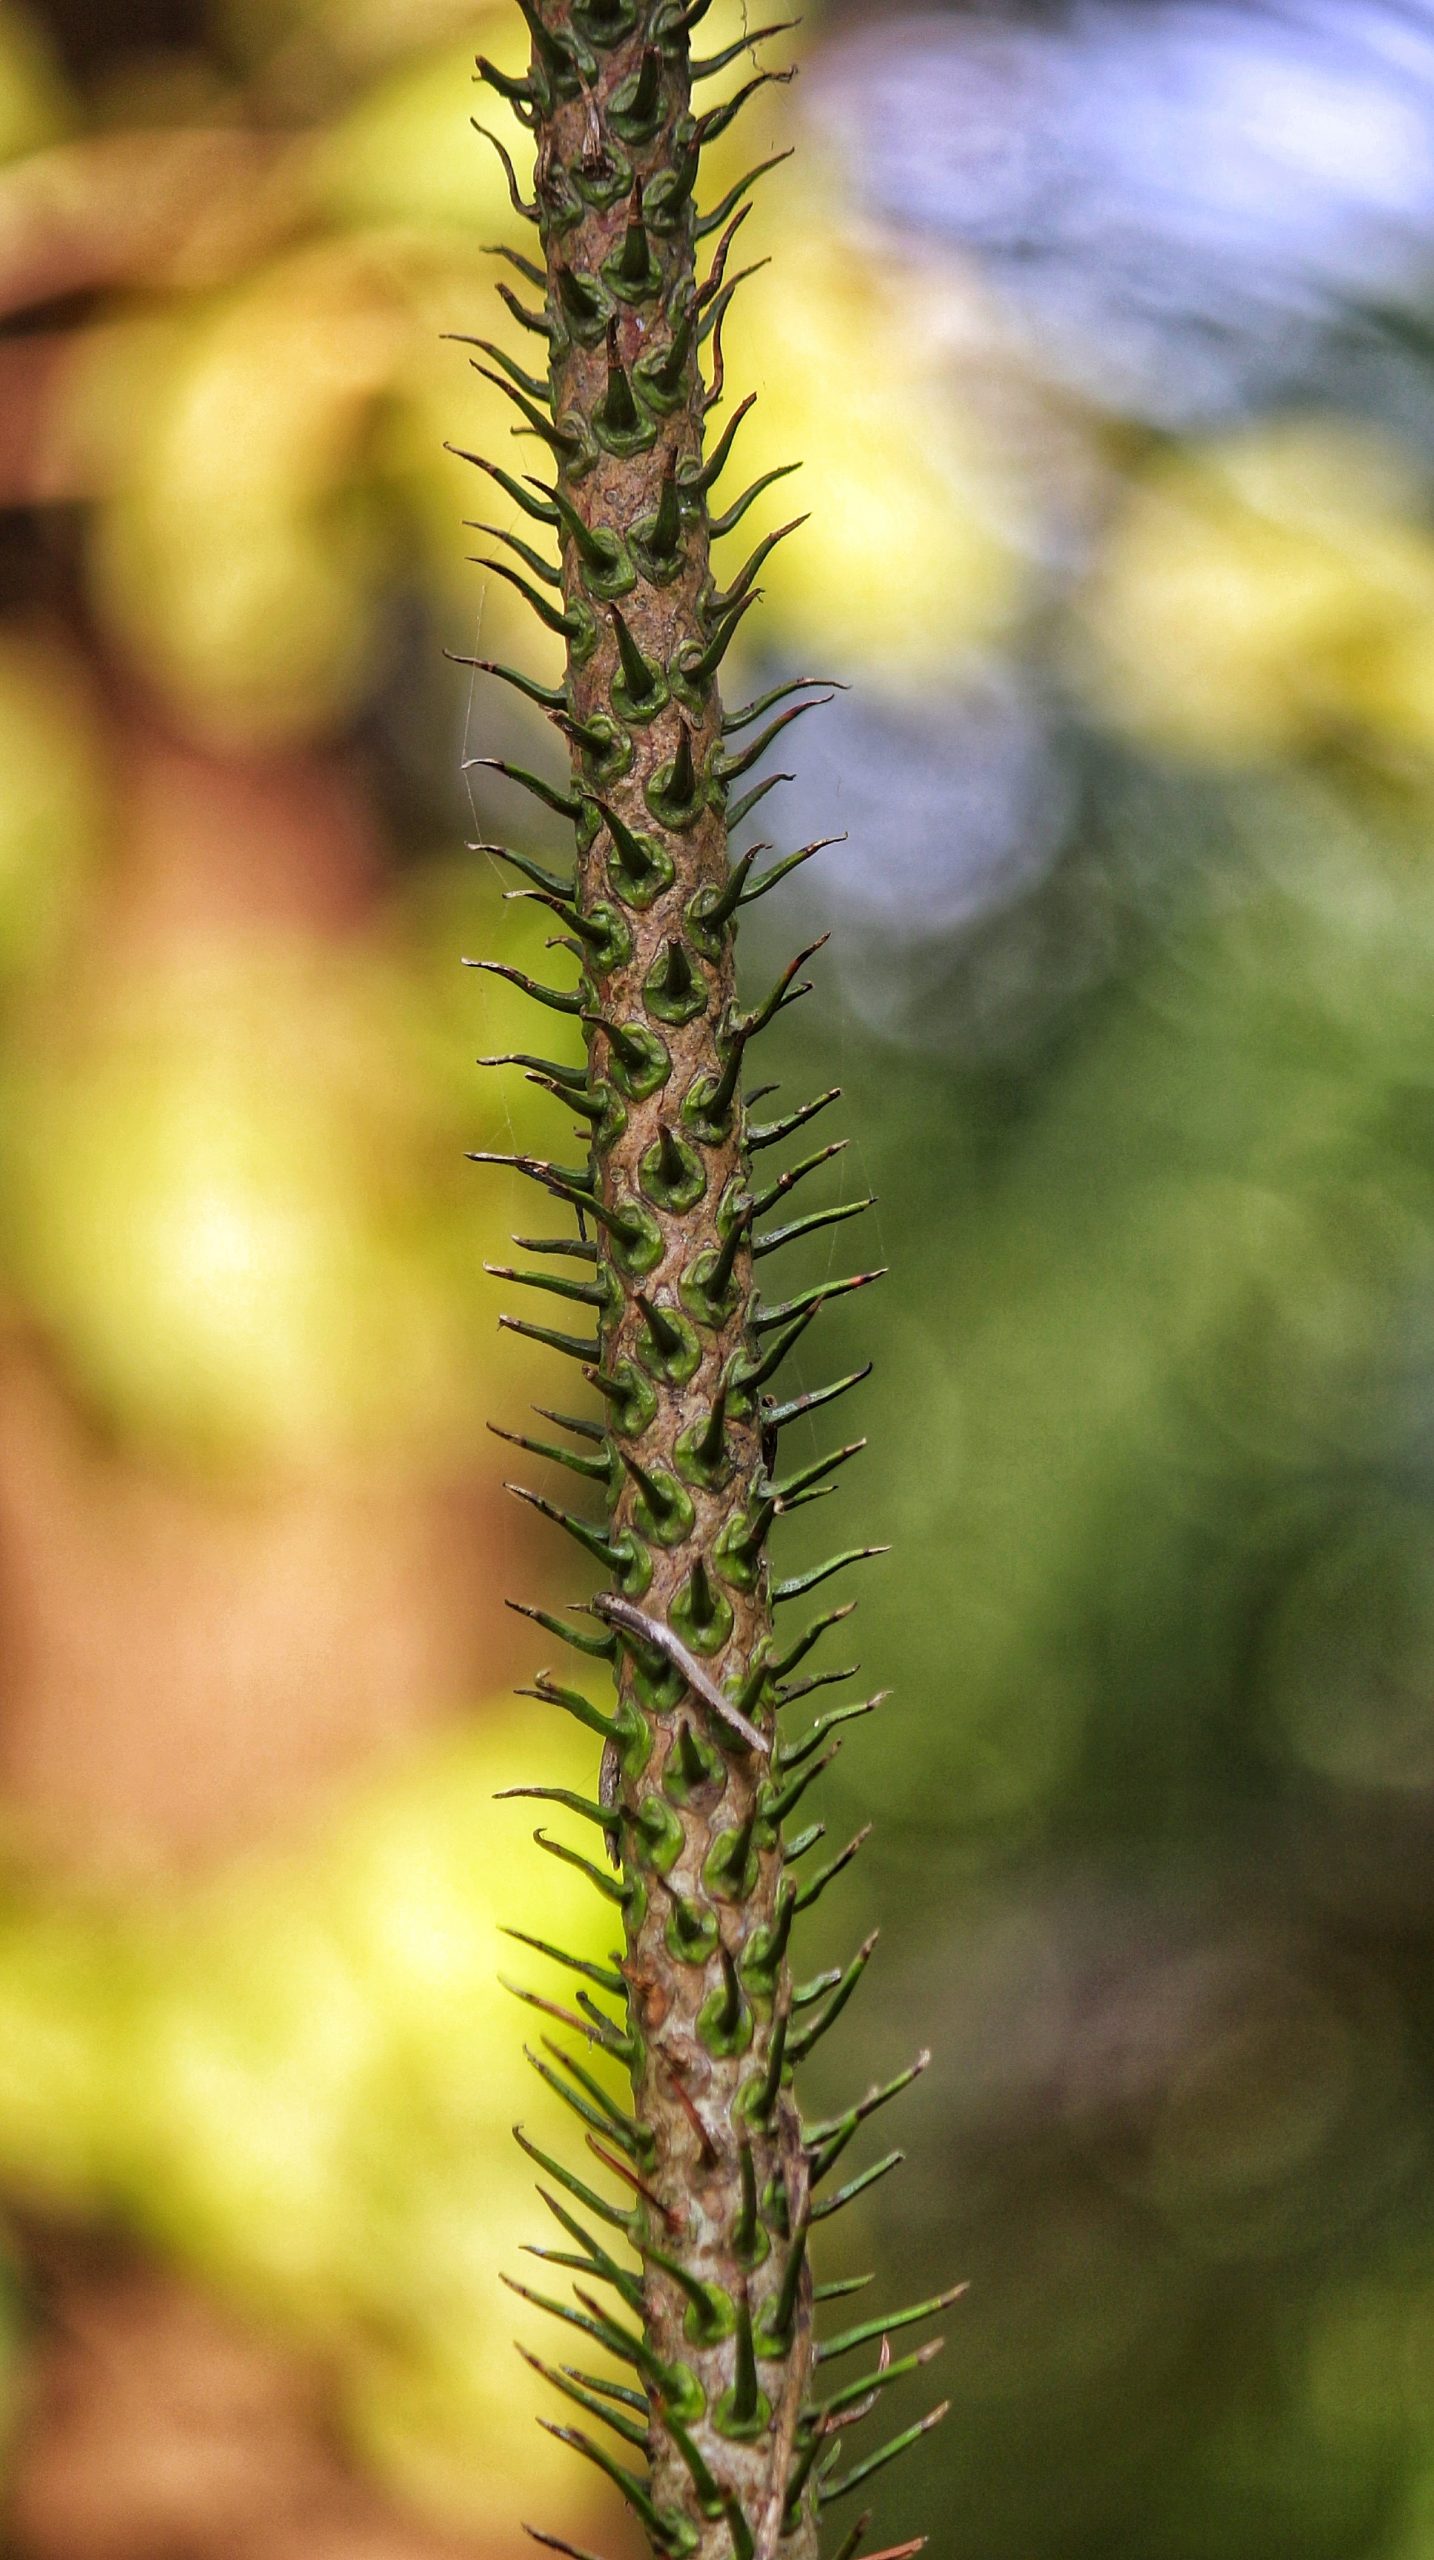 Thorny stem of a plant